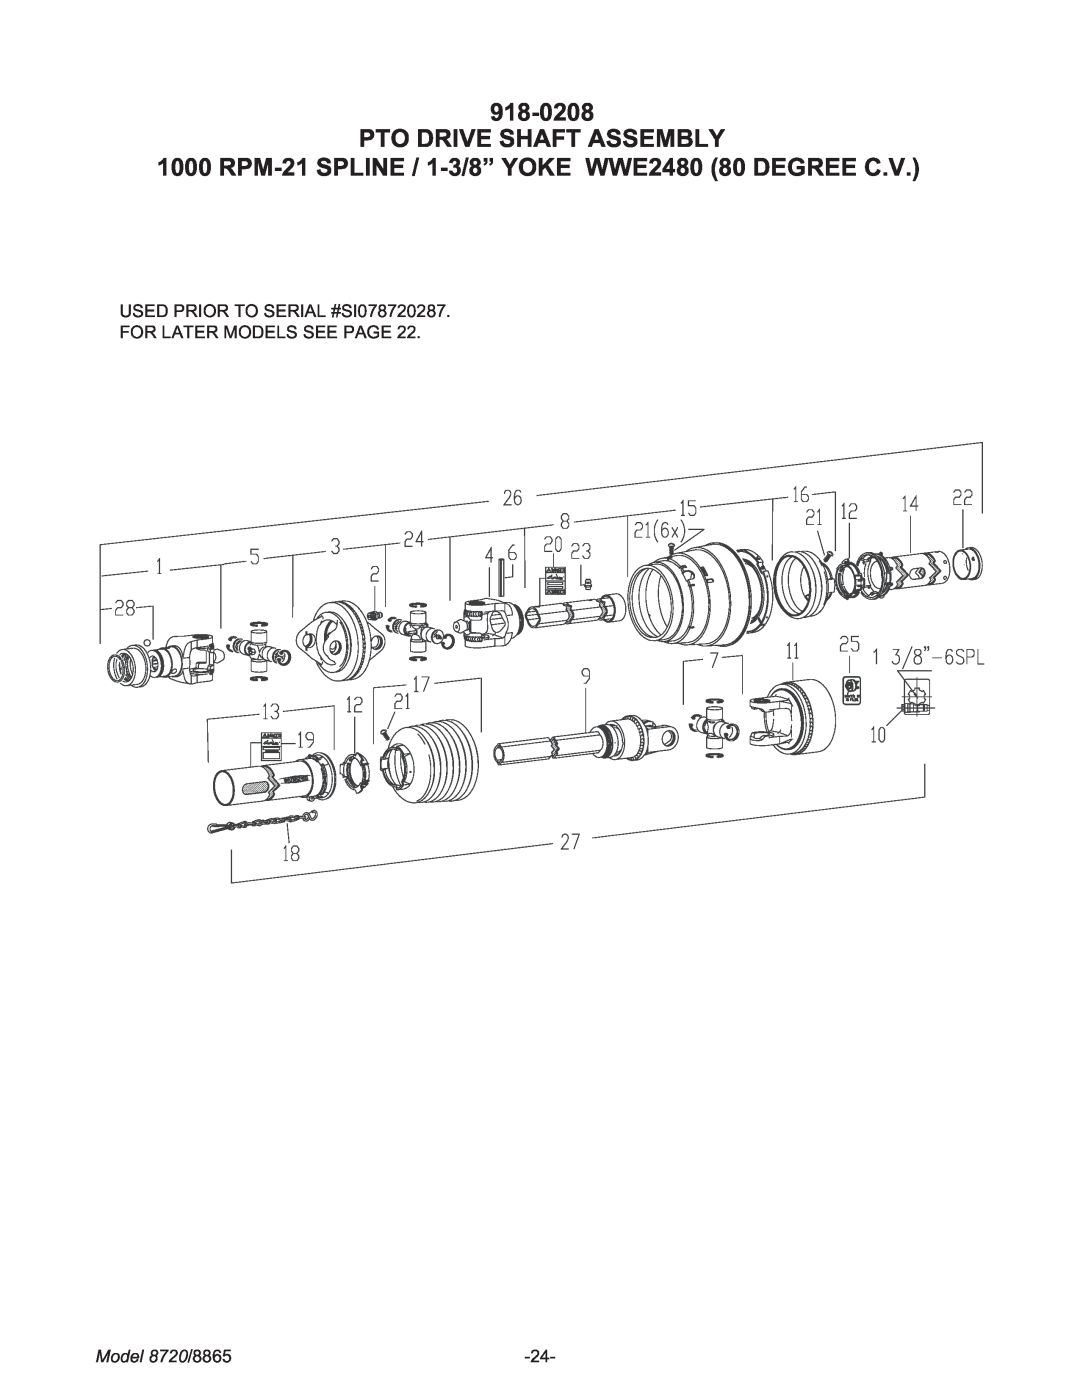 Meyer manual Pto Drive Shaft Assembly, RPM-21 SPLINE / 1-3/8” YOKE WWE2480 80 DEGREE C.V, Model 8720/8865 